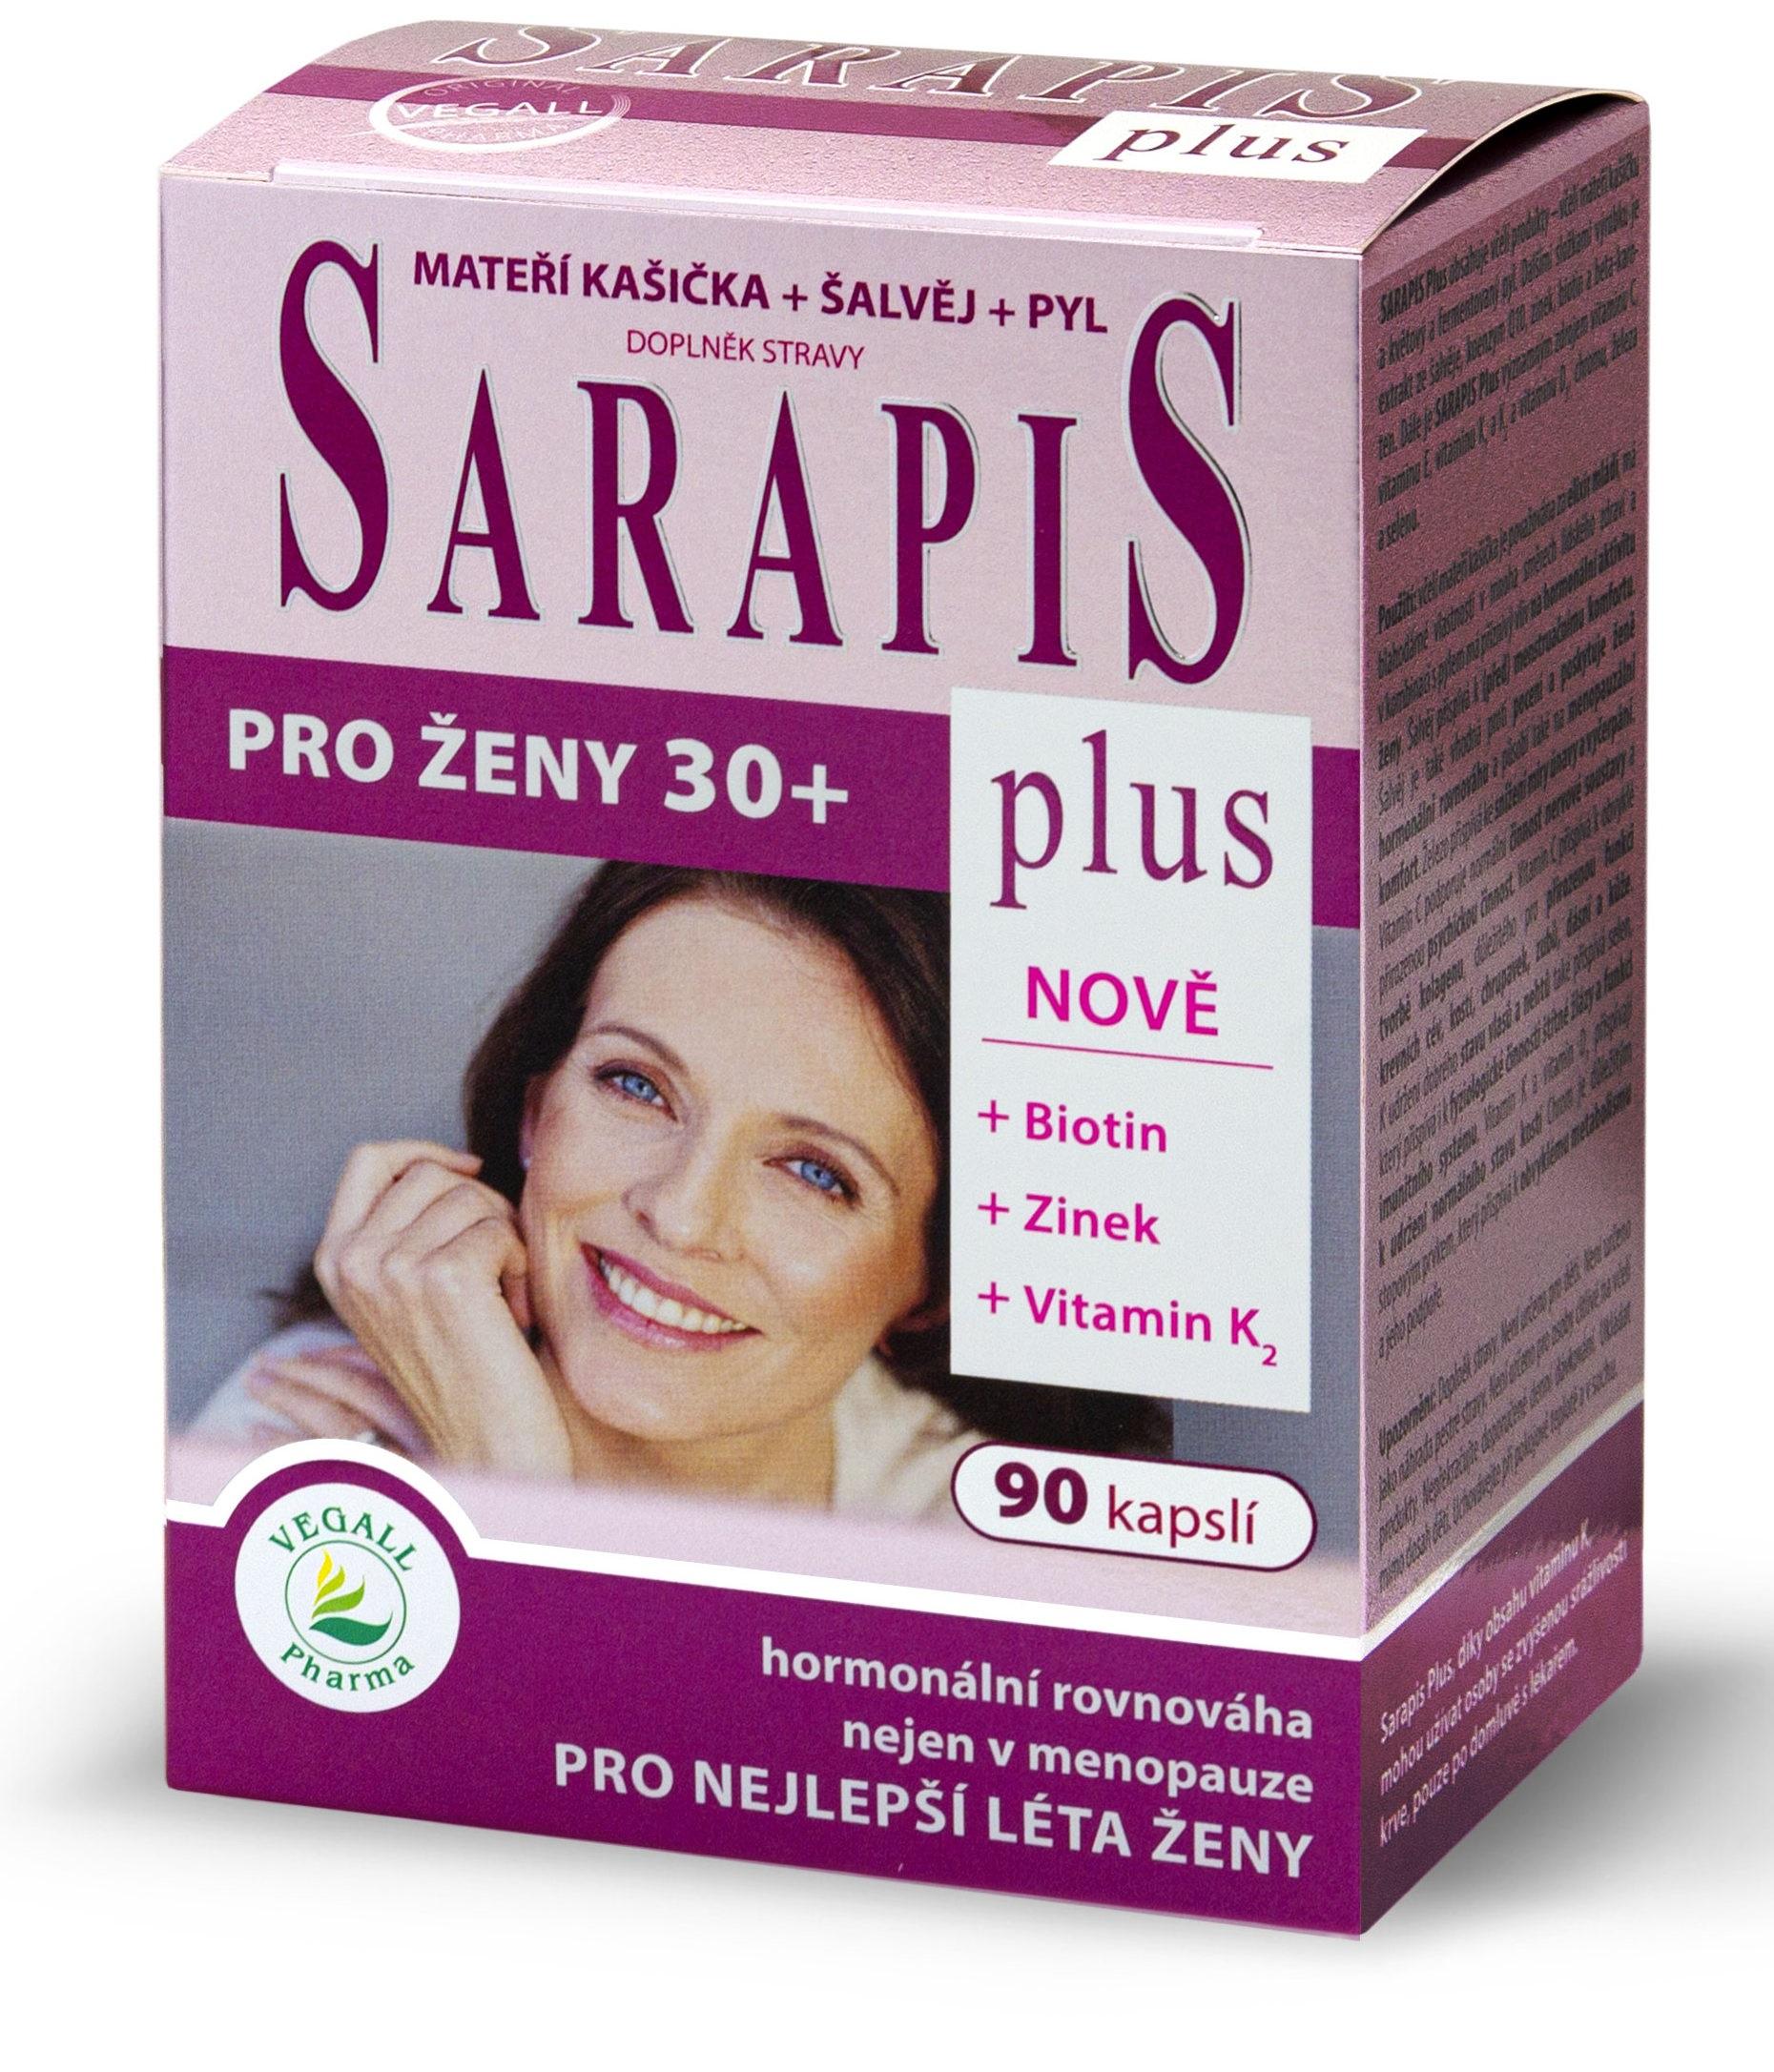 Sarapis plus 90 kapslí - Klimakterium